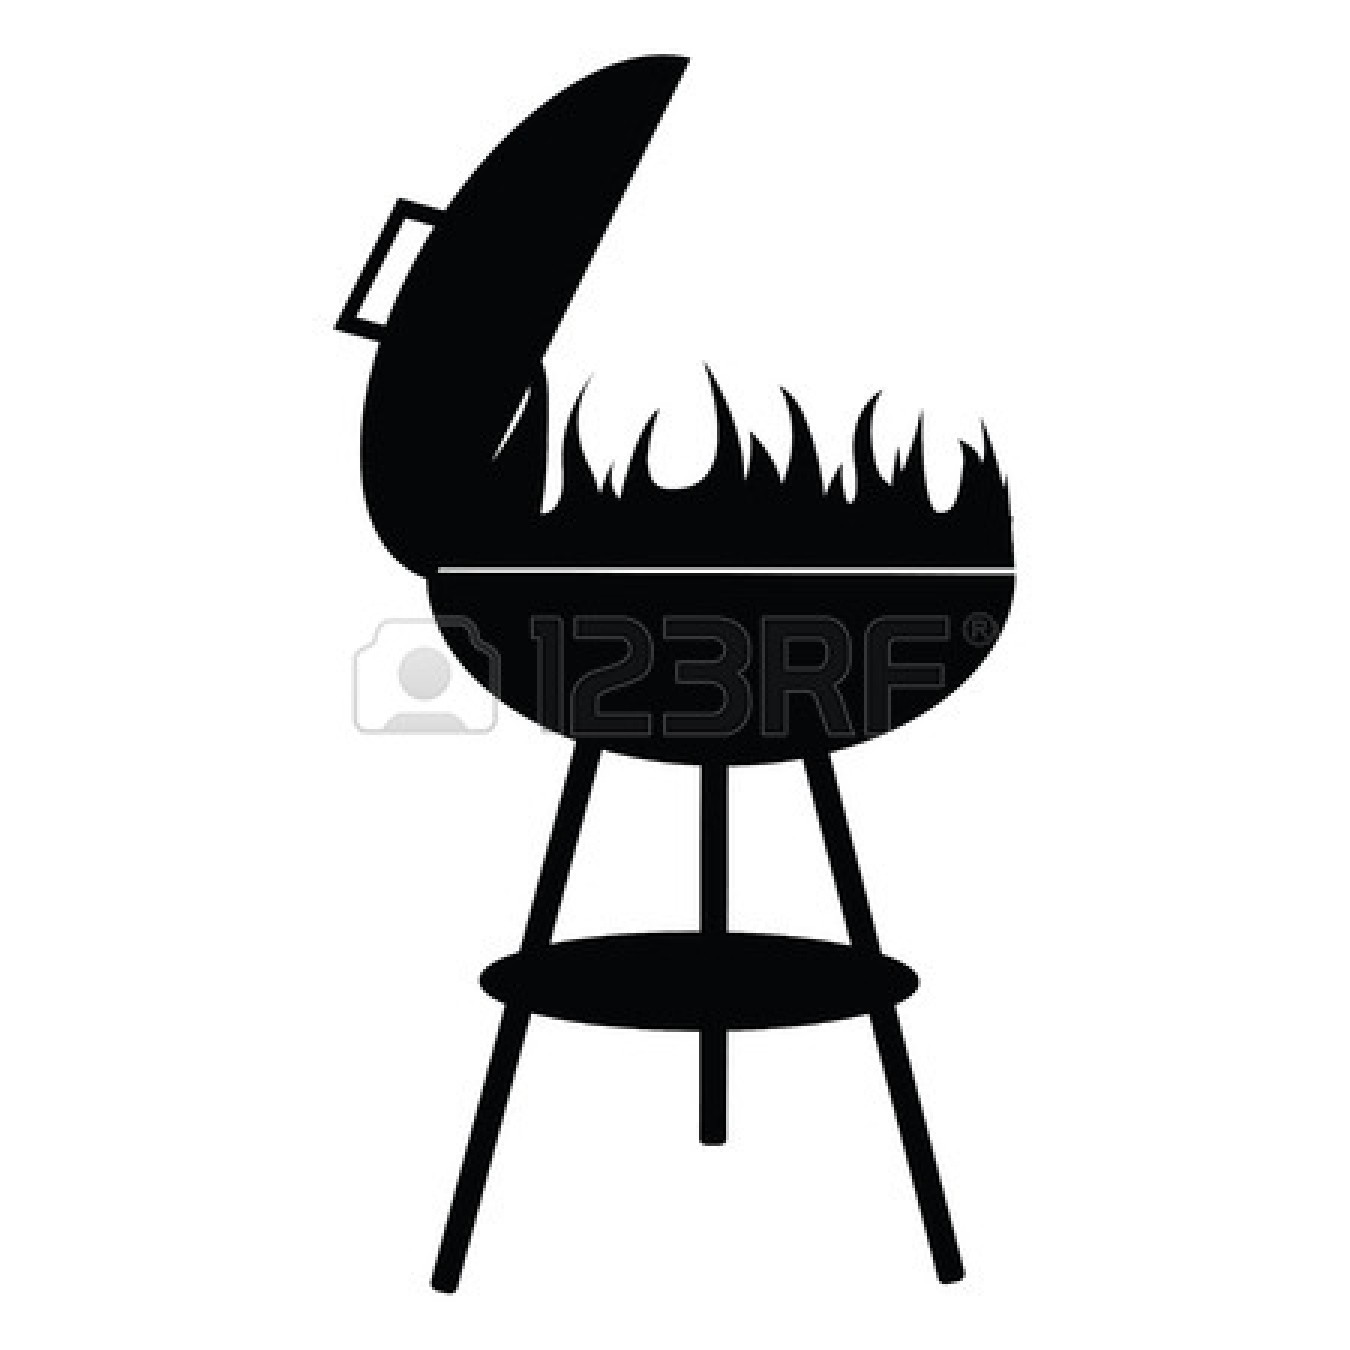 Bbq Grill Clipart - bbq grill clipart black and white. bbq grill clipar...